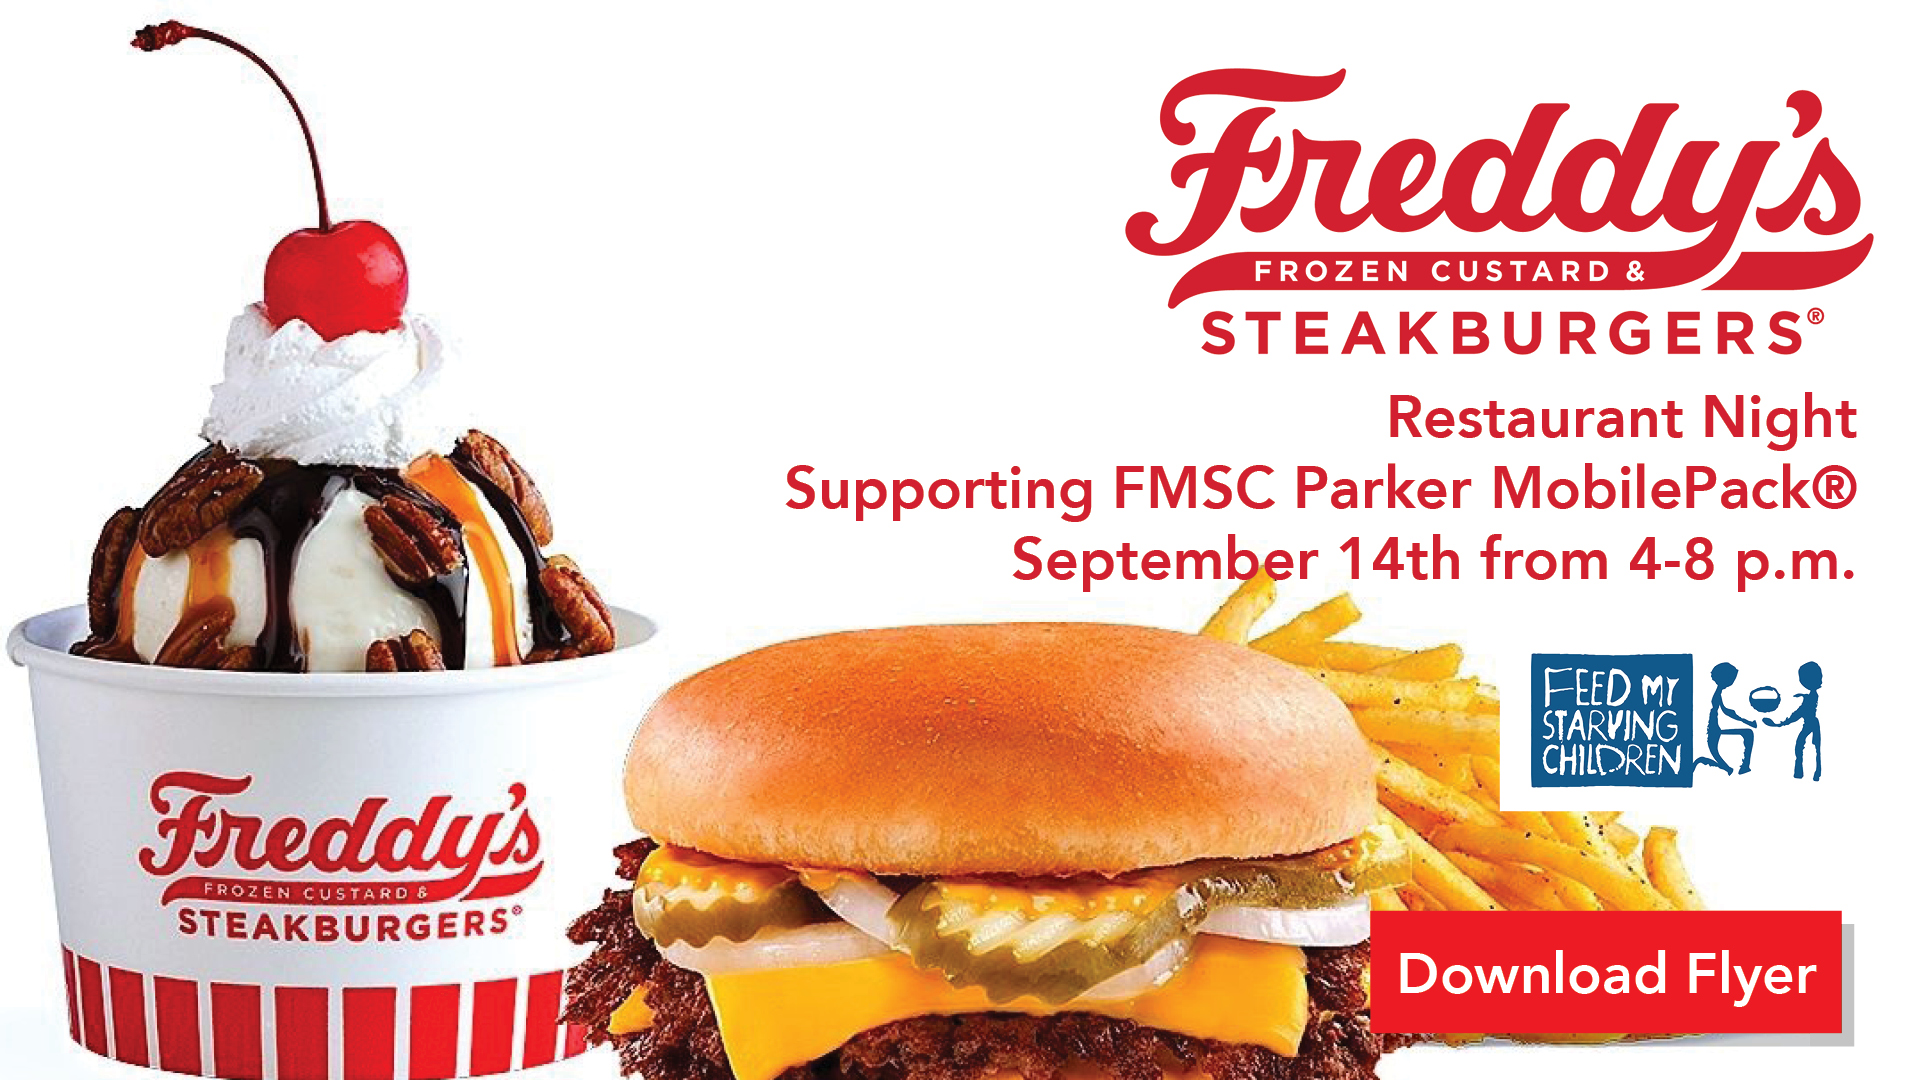 Freddy's Restaurant Night sales support FMSC